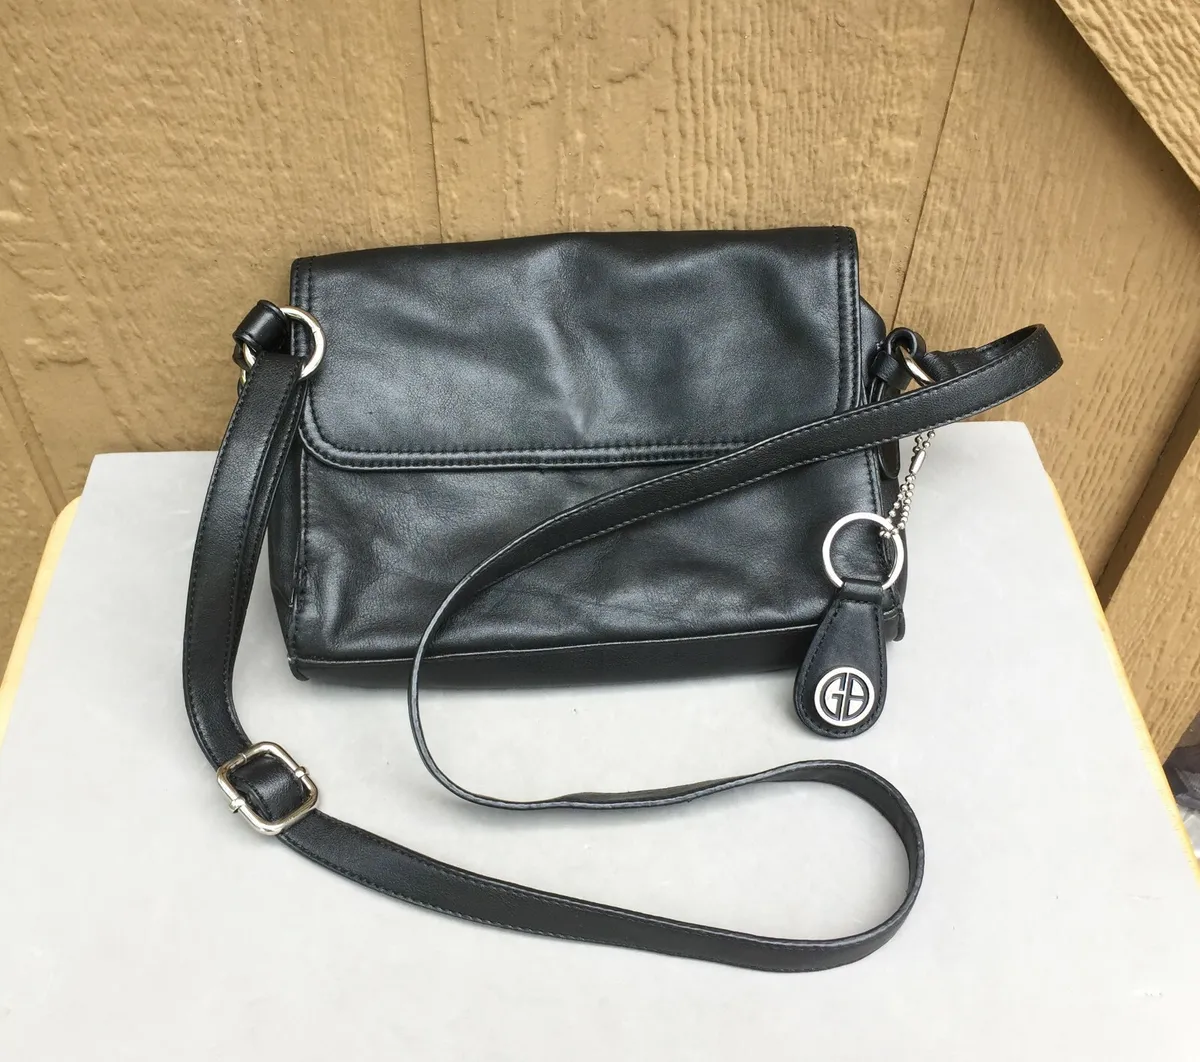 Giani Bernini Black Leather Crossbody Handbag Purse for sale online | eBay